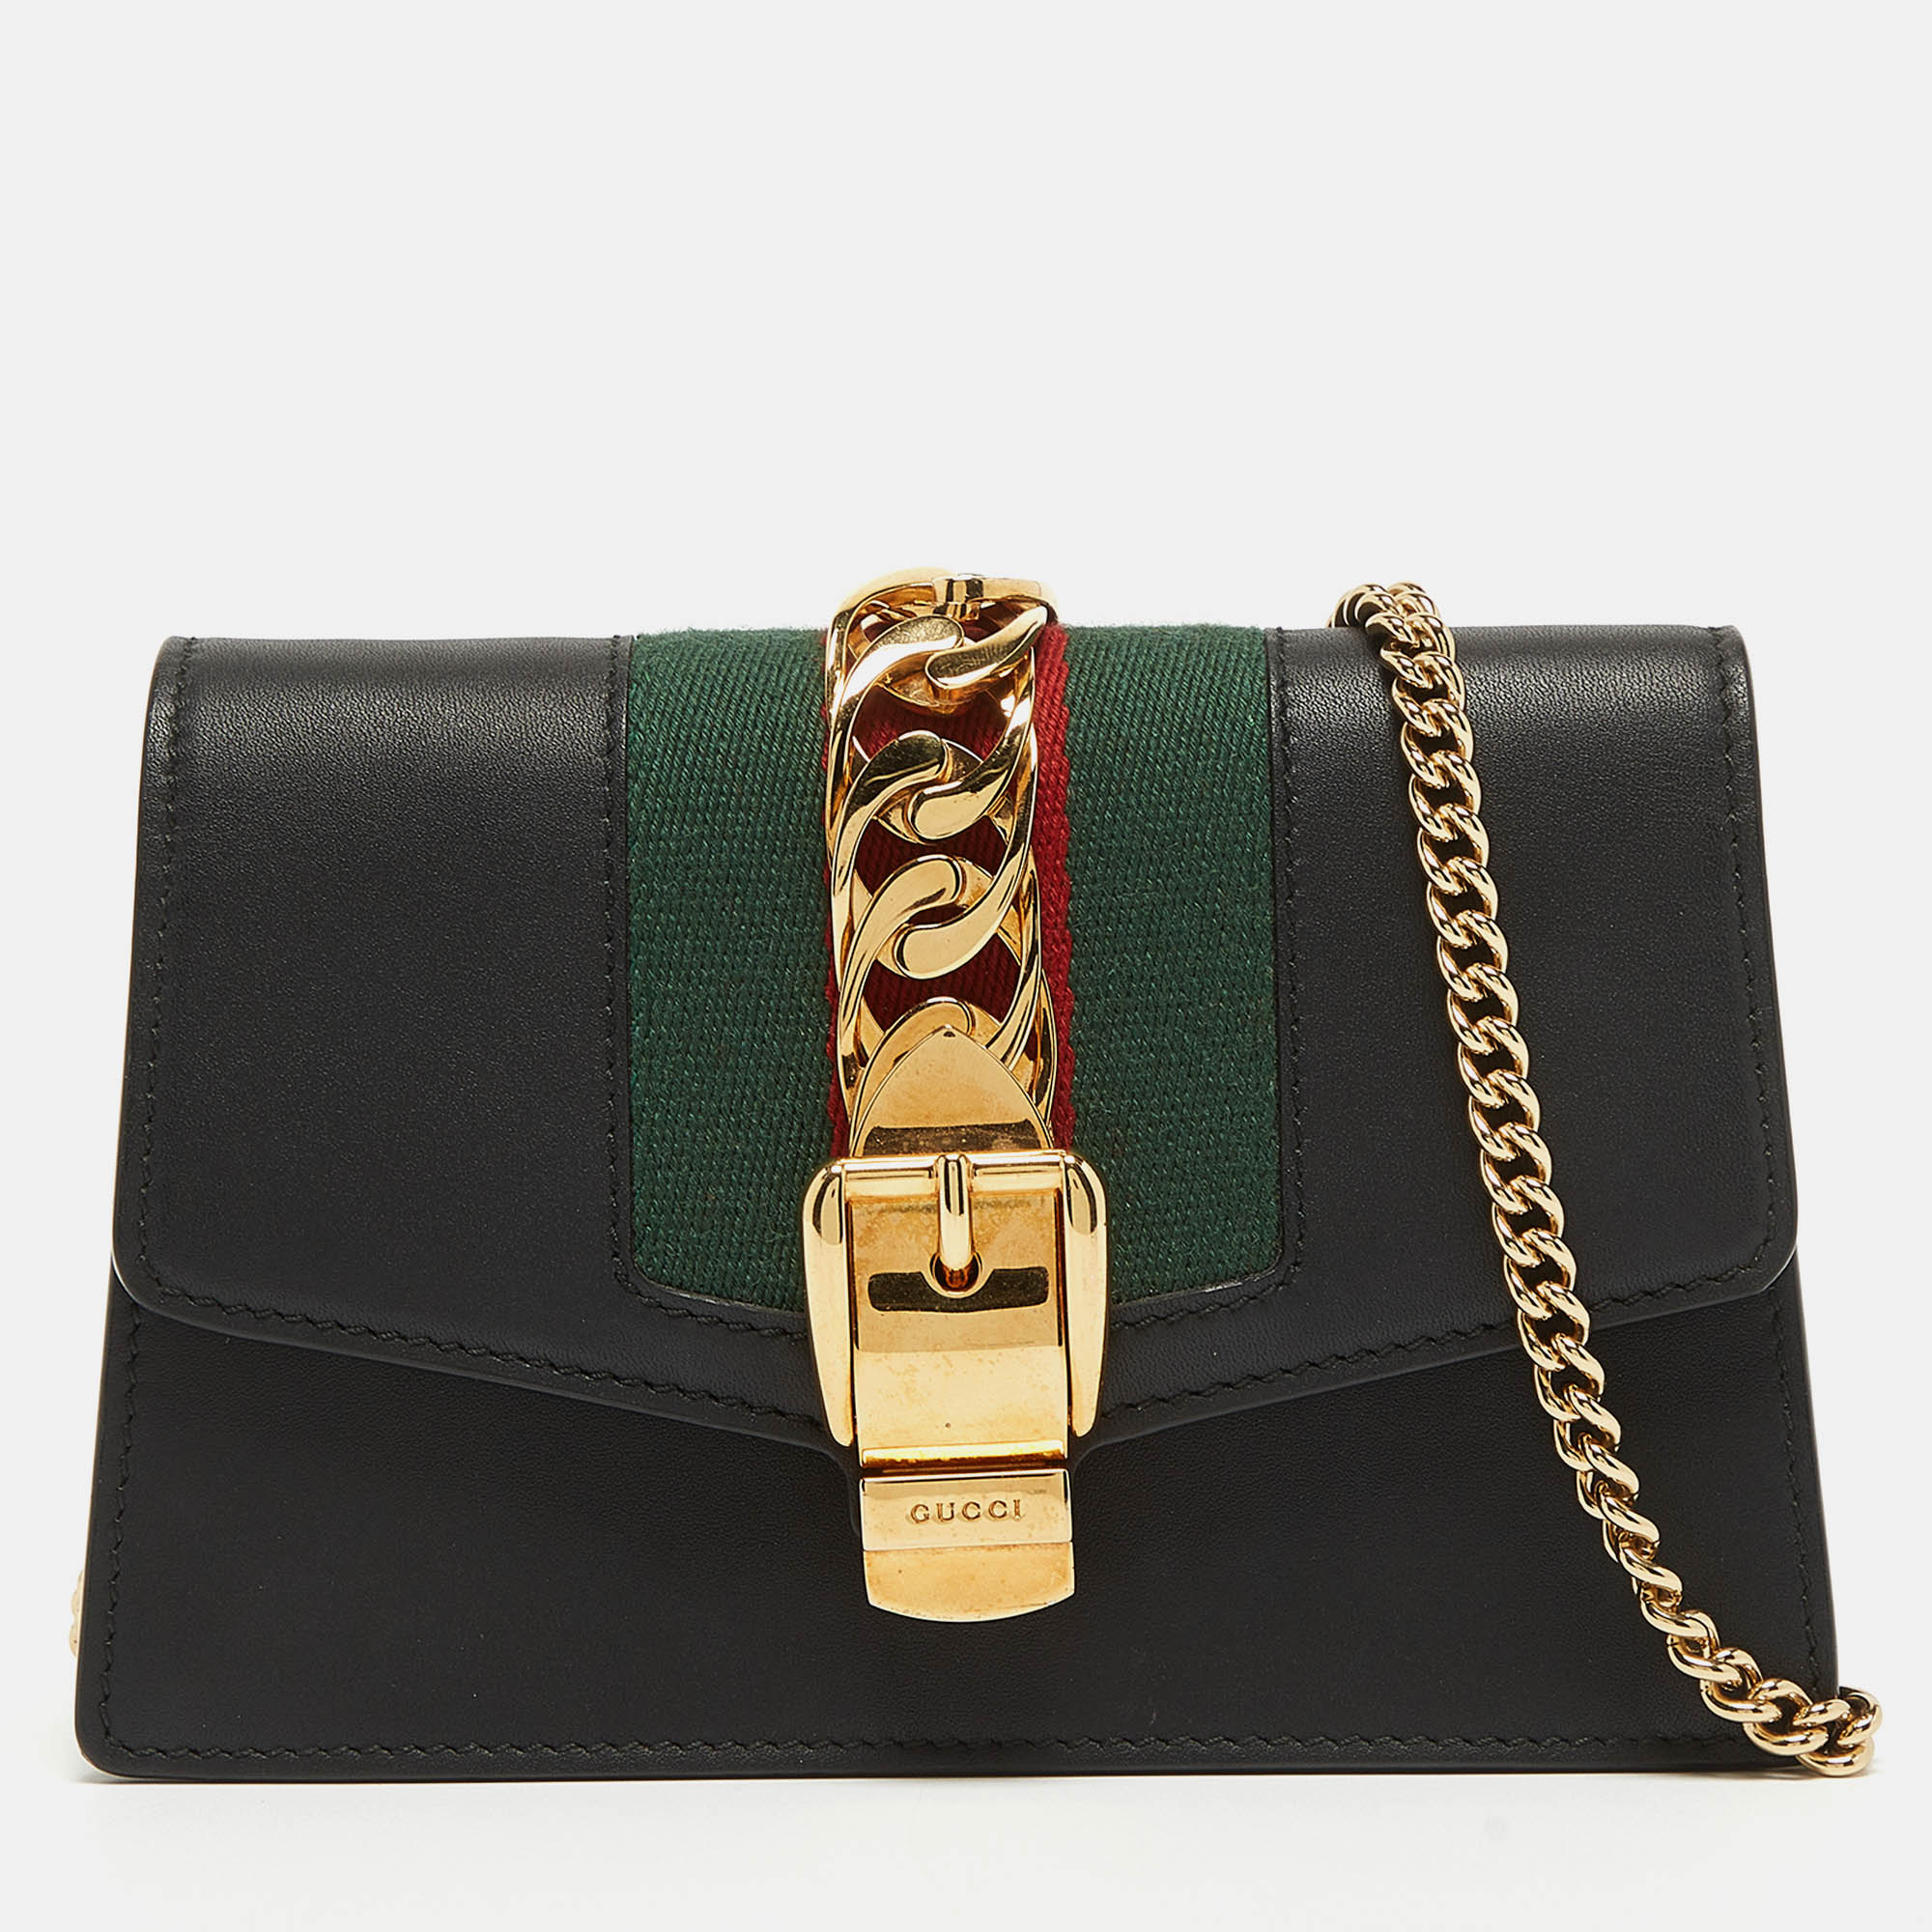 Gucci black leather super mini sylvie chain shoulder bag